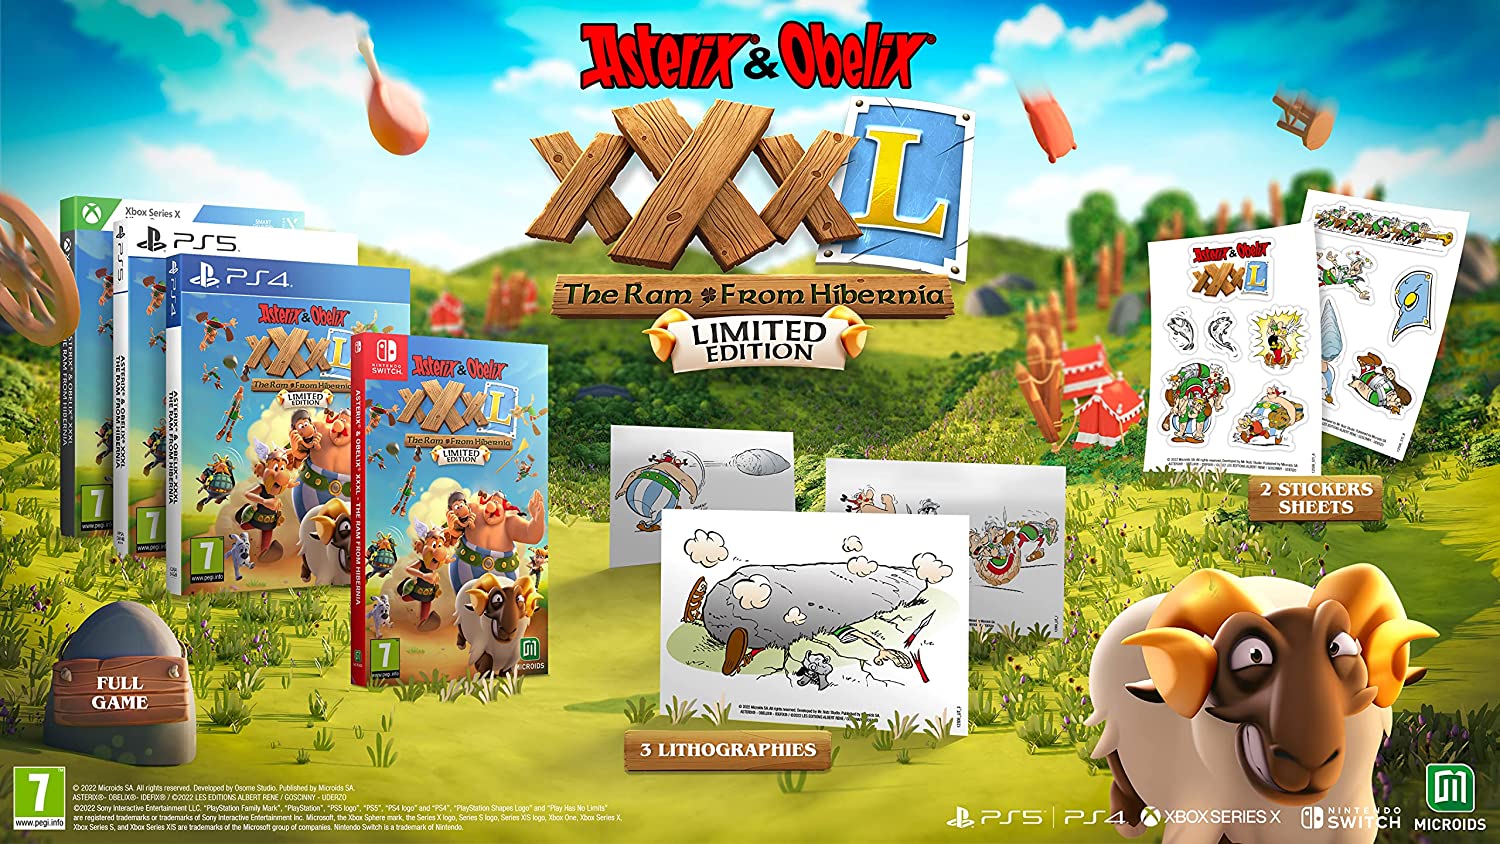 Скриншоты Asterix & Obelix XXXL: The Ram from Hibernia - Limited Edition [Xbox One/Series X, русская версия] интернет-магазин Омегагейм